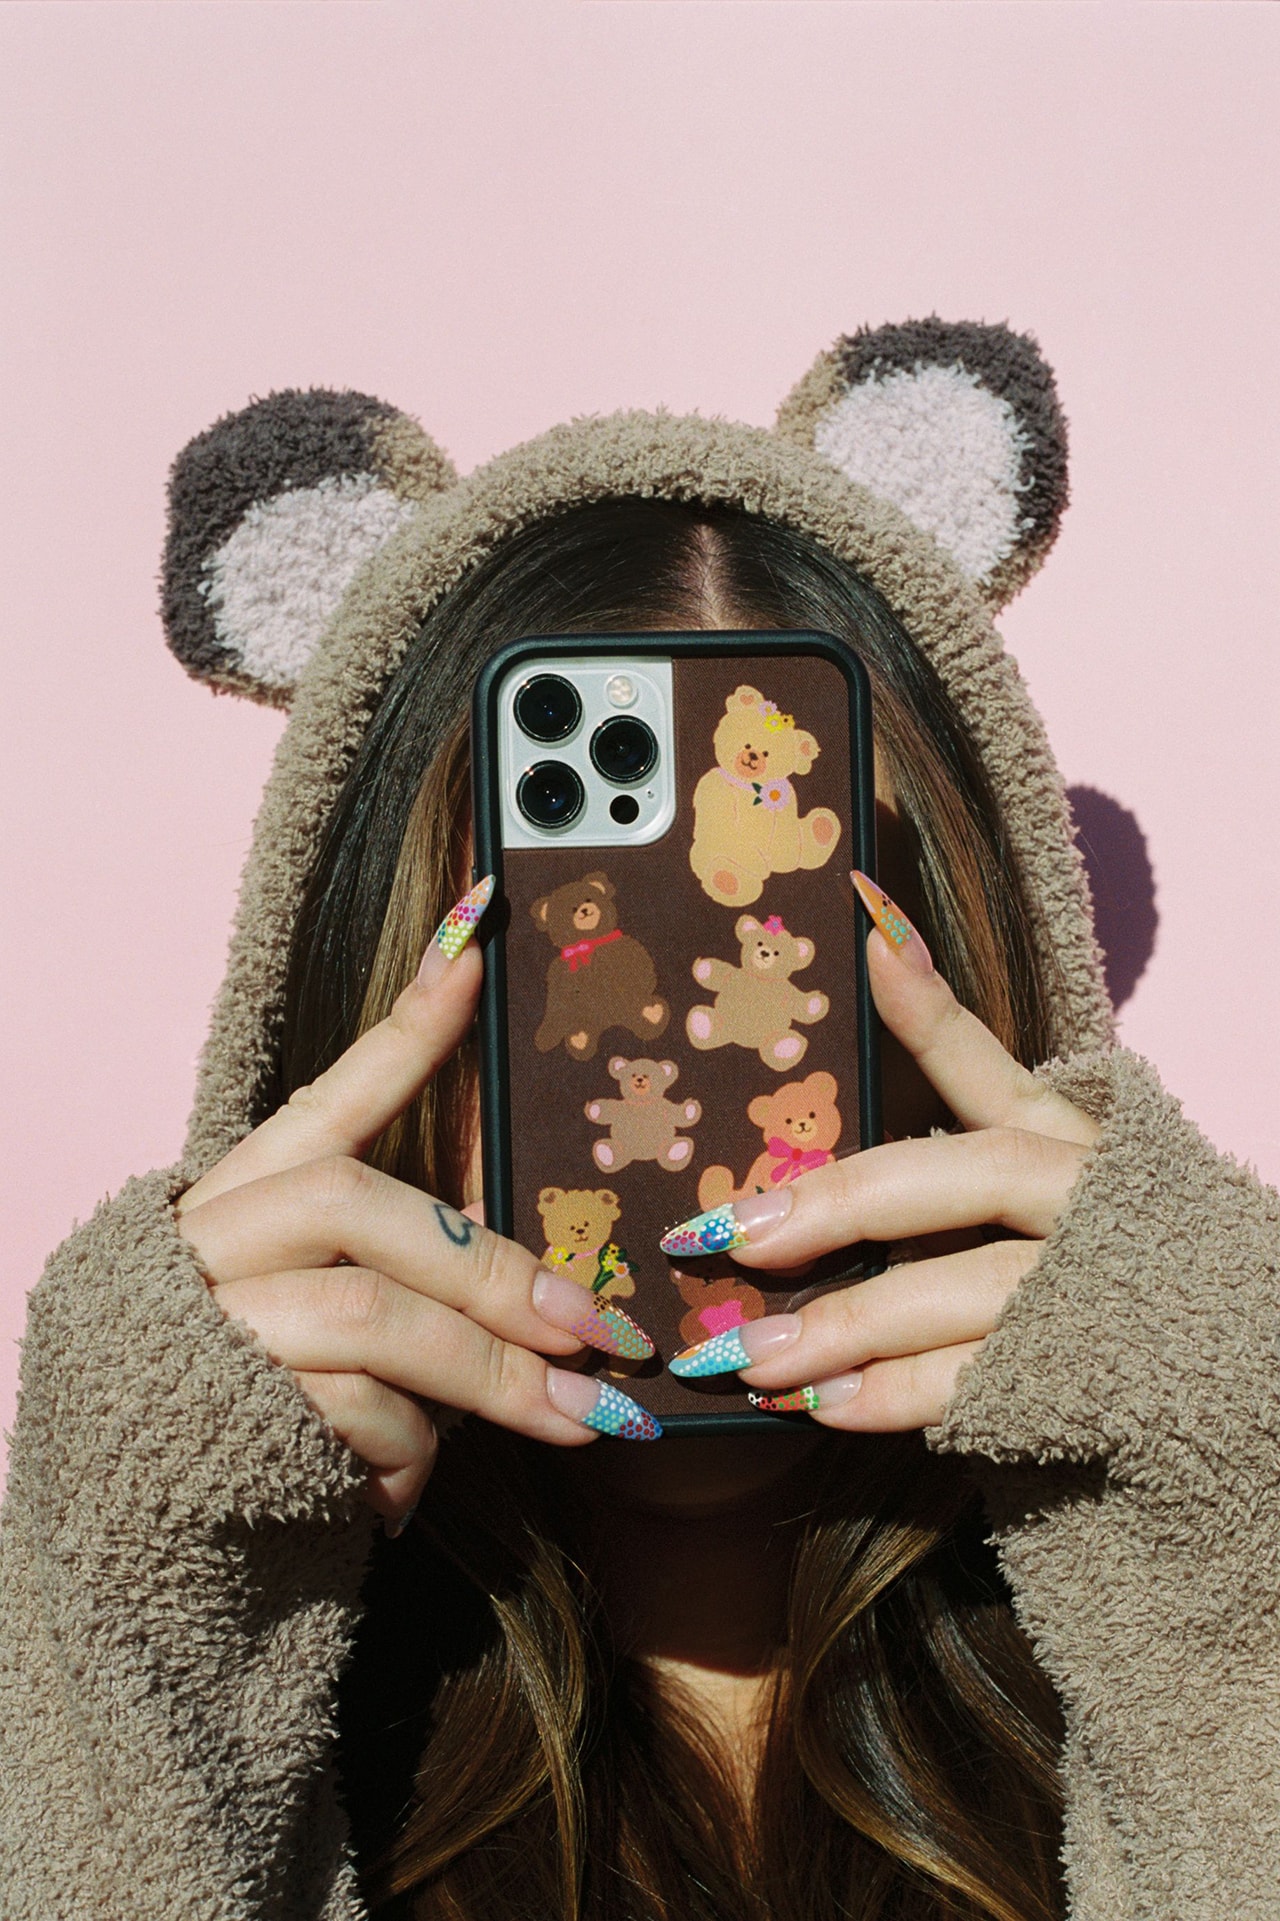 Wildflower Cases Bear-y Cute iPhone Cases Sydney Lynn Carlson Valentine's Day Teddy Bear Phone Lookbook Campaign